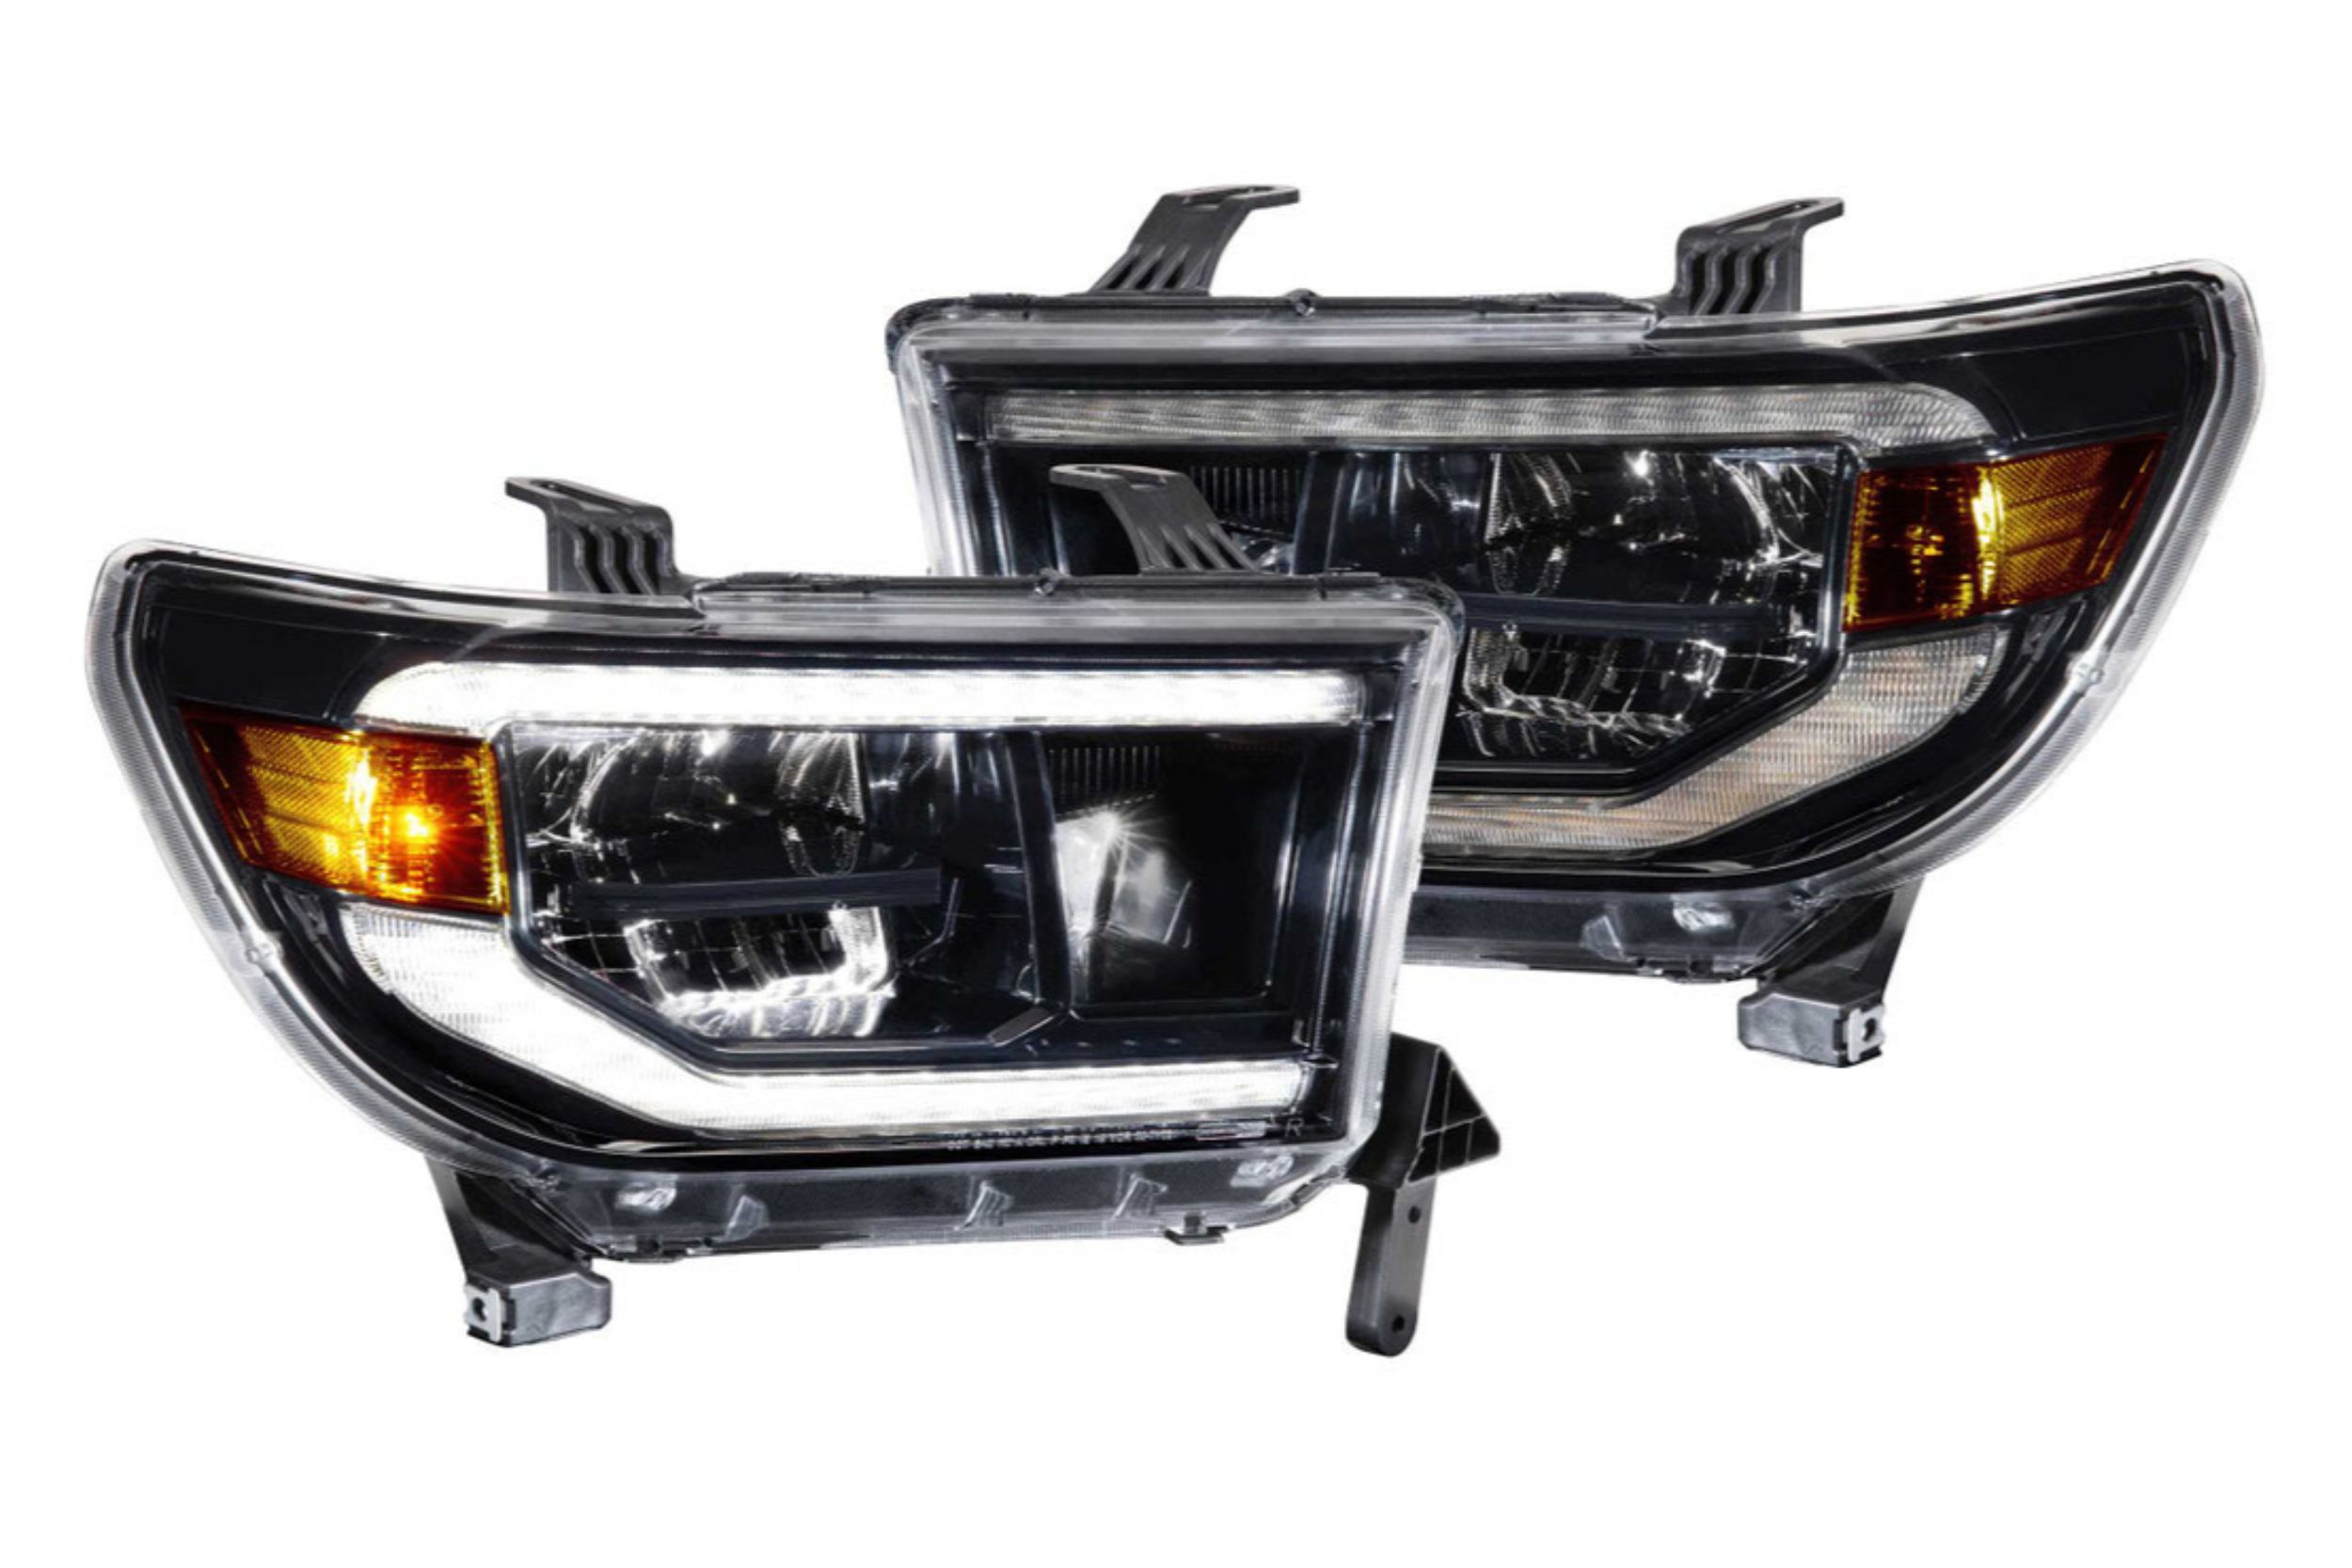 Morimoto | The Benchmark in Automotive Lighting | 2010 Toyota Tundra LED and HID Upgrades 2010 Toyota Tundra Headlight Bulb High Beam